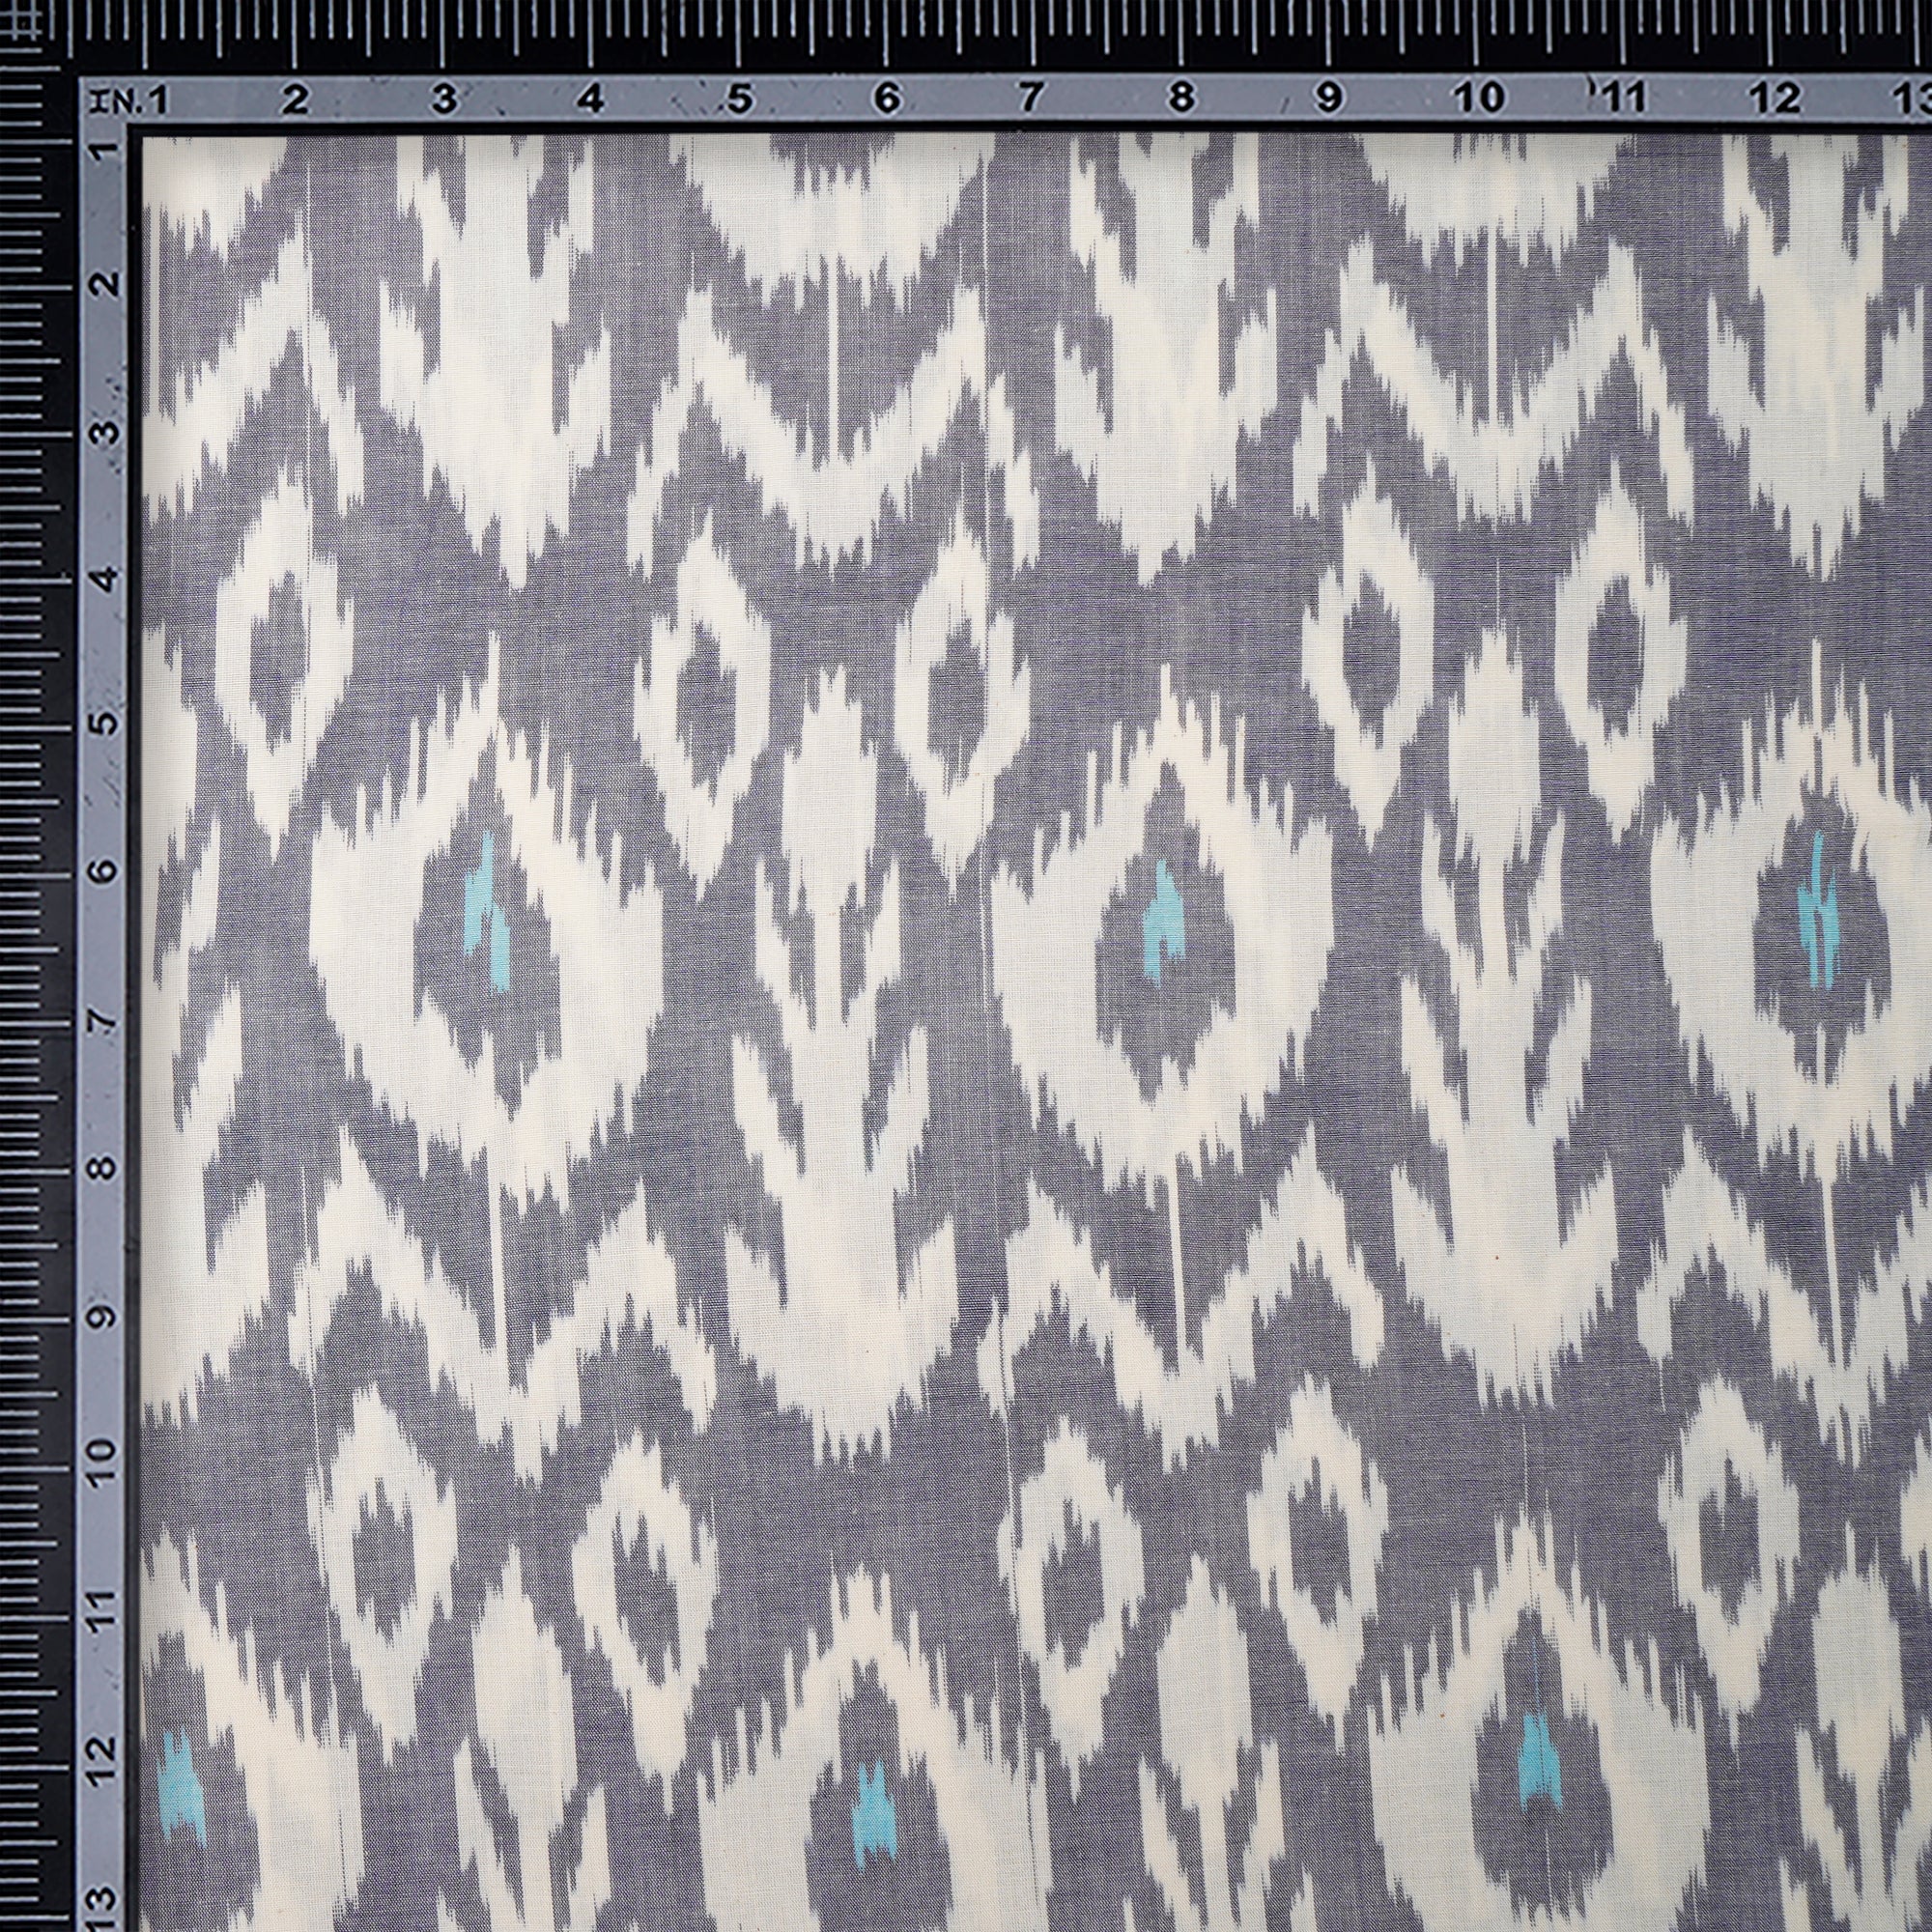 Lavender-White Mercerized Washed Uzbek Motif Woven Ikat Cotton Fabric